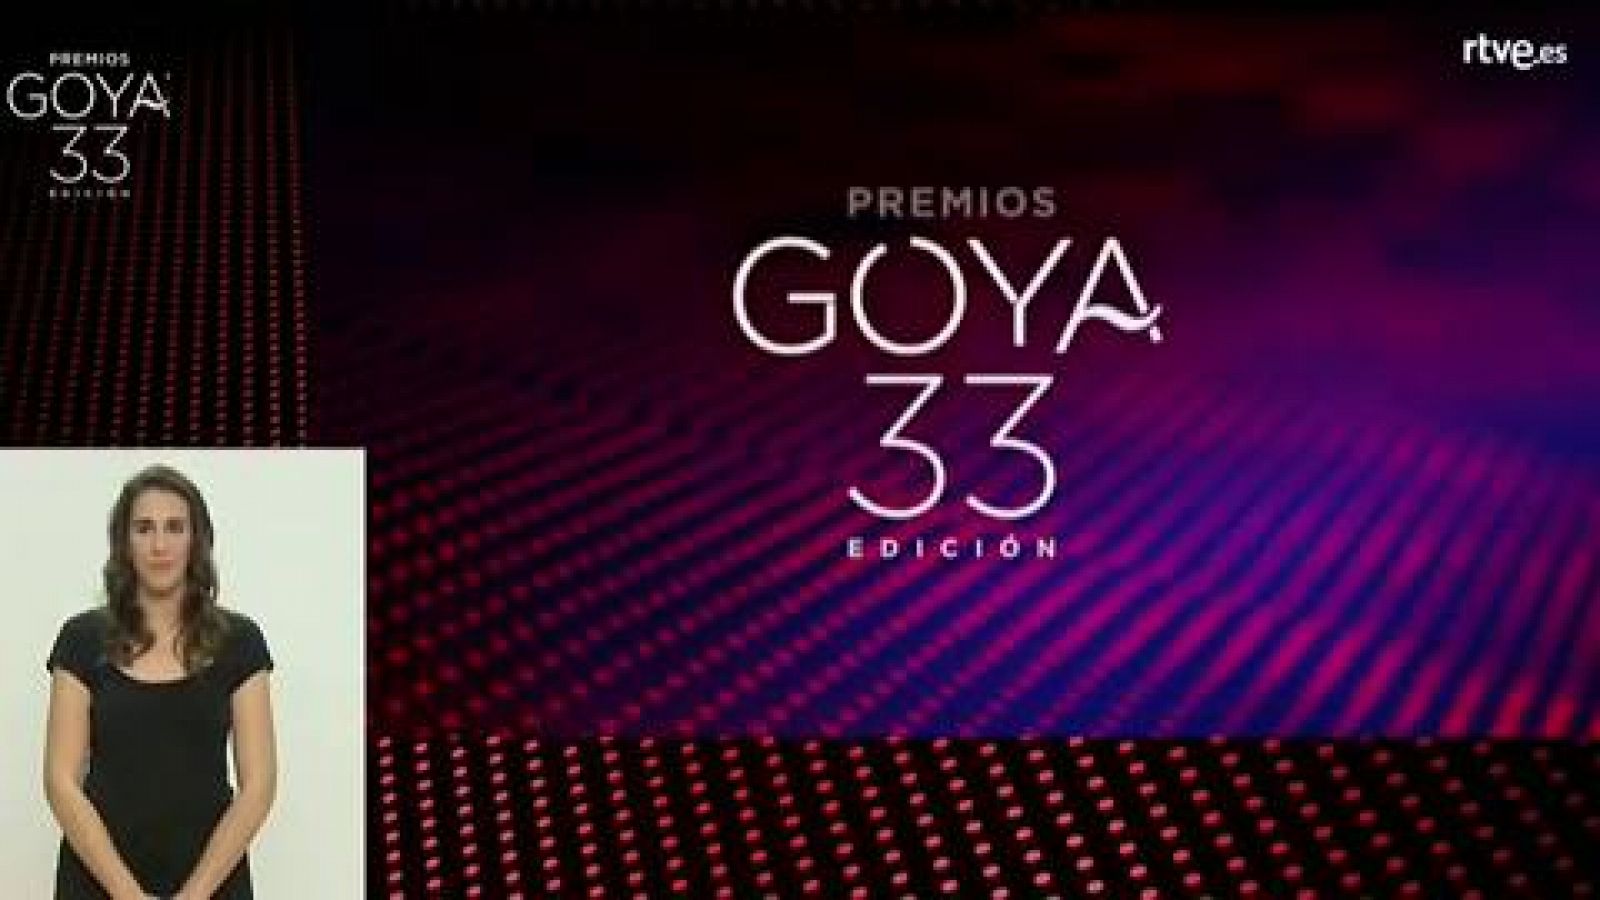 Premios Goya: 33 Edición Premios Goya en lengua de signos (Parte 1 de 2) | RTVE Play